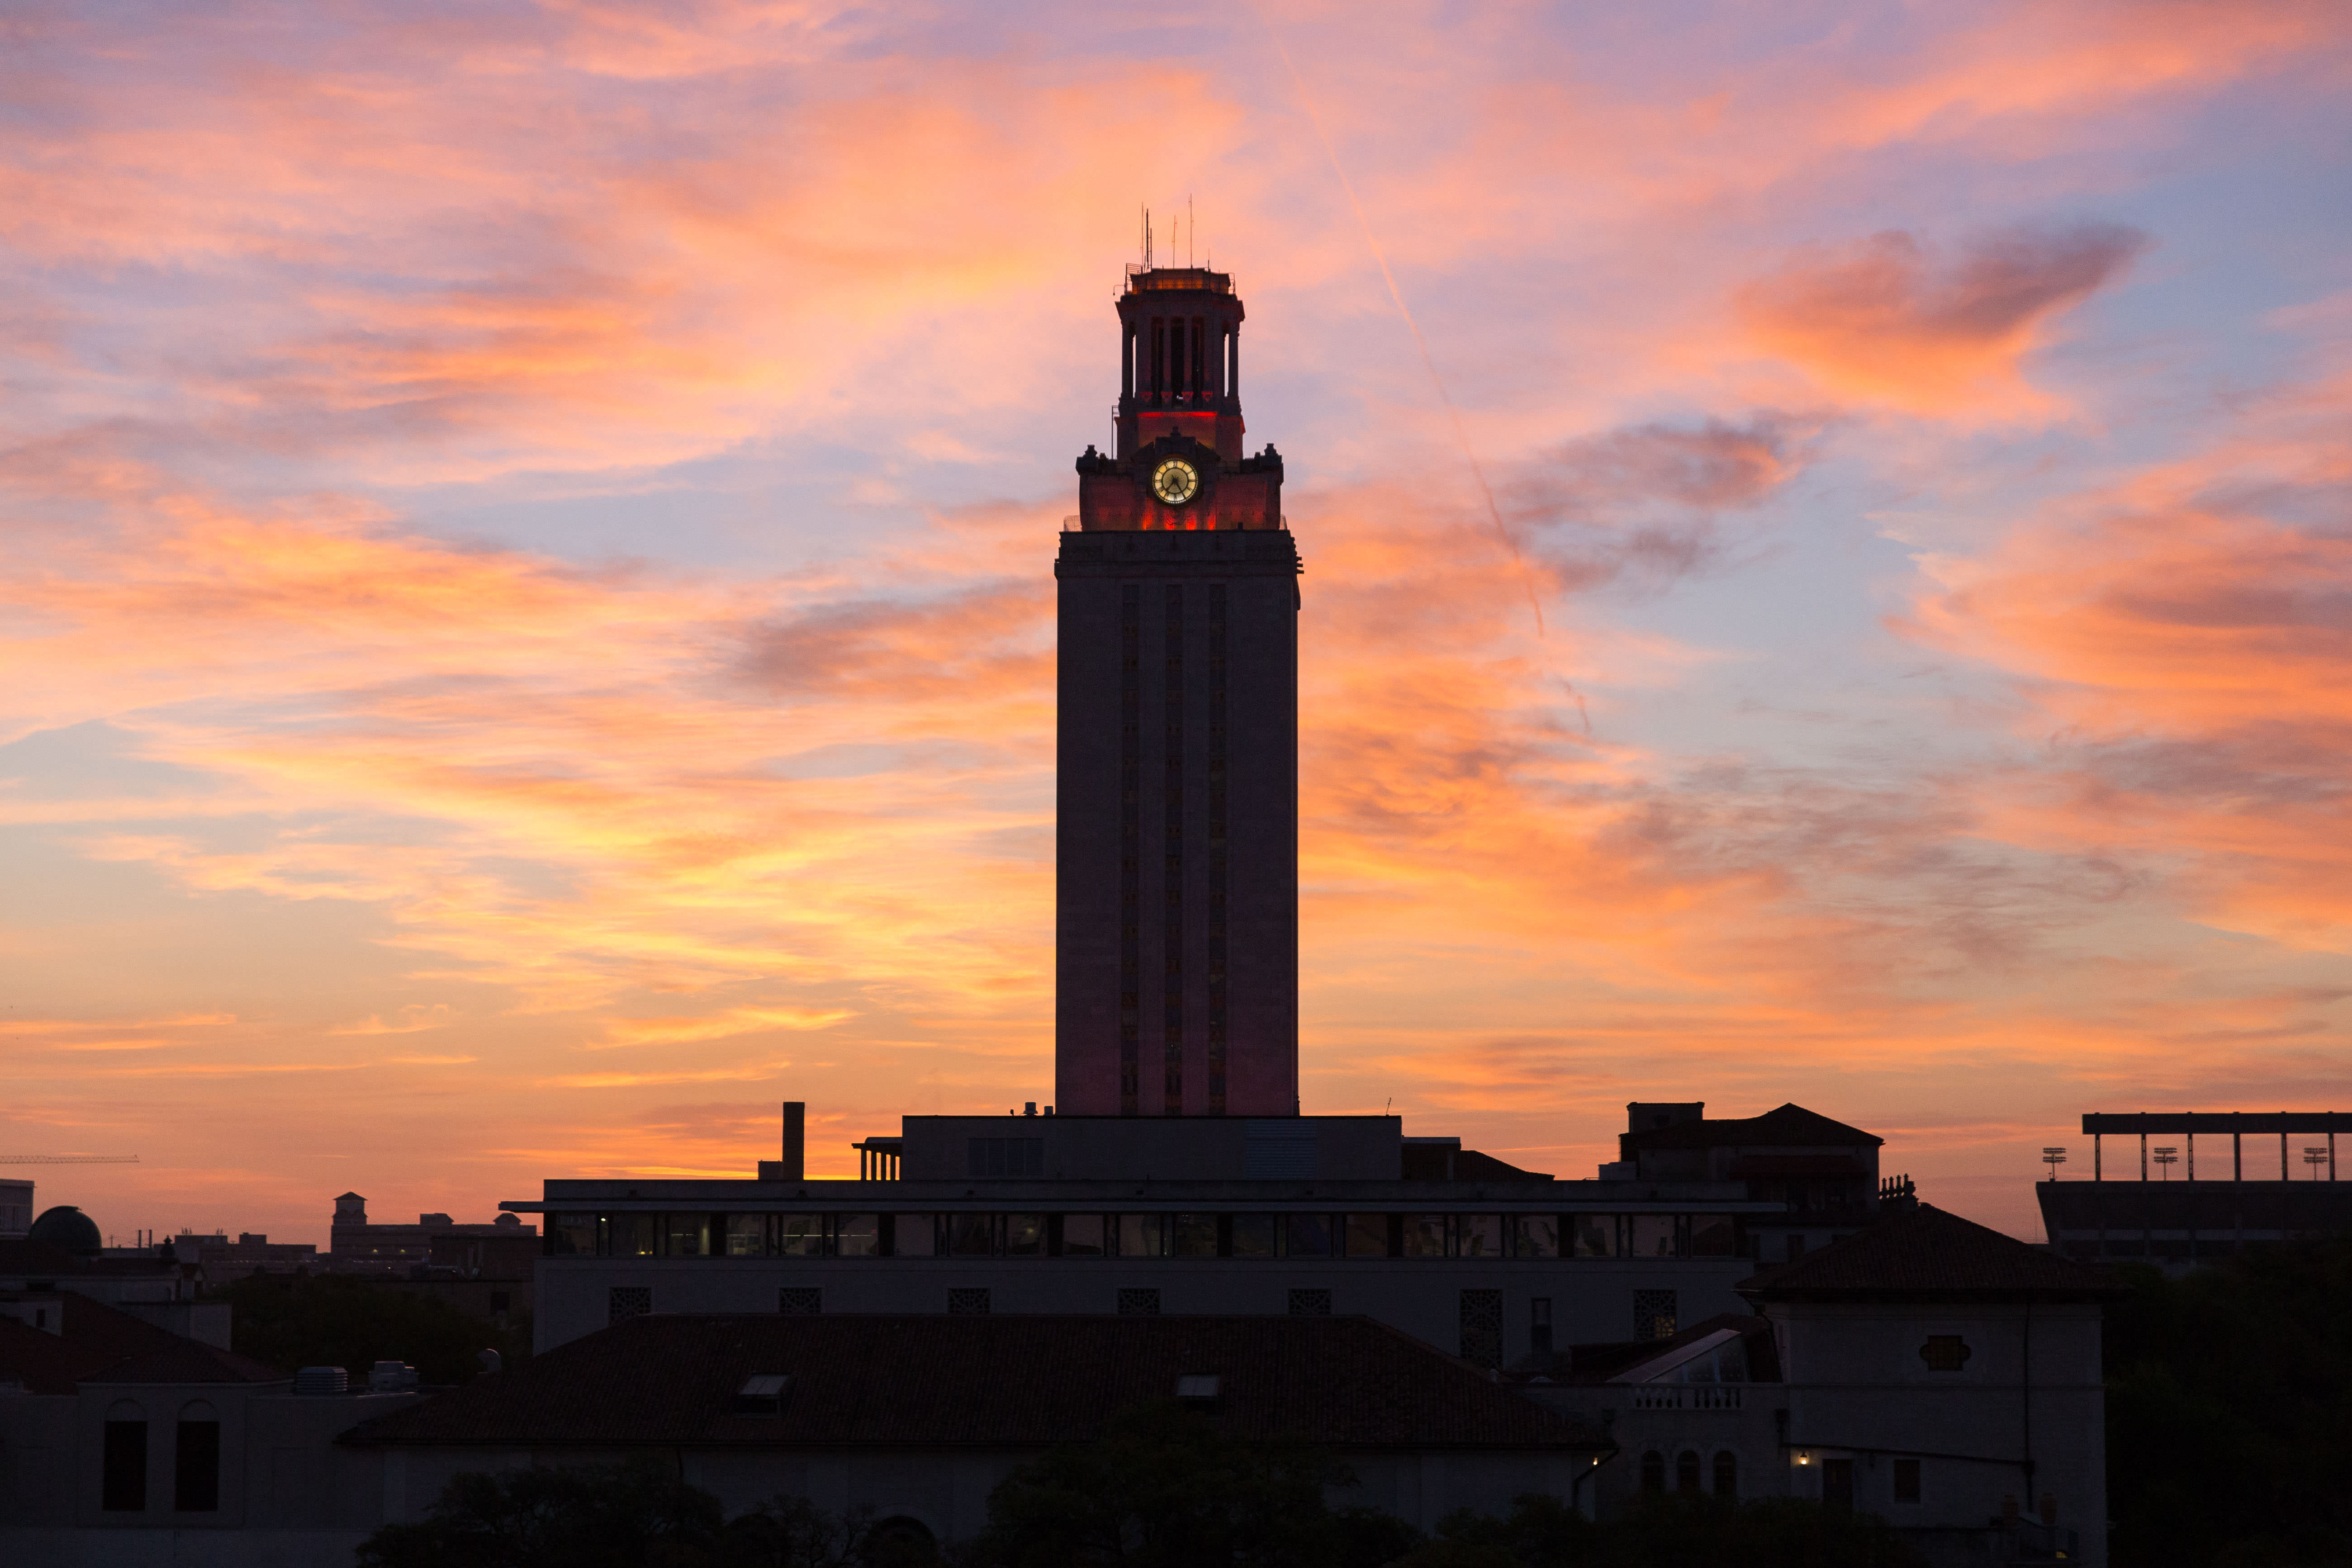 The UT tower at sunrise